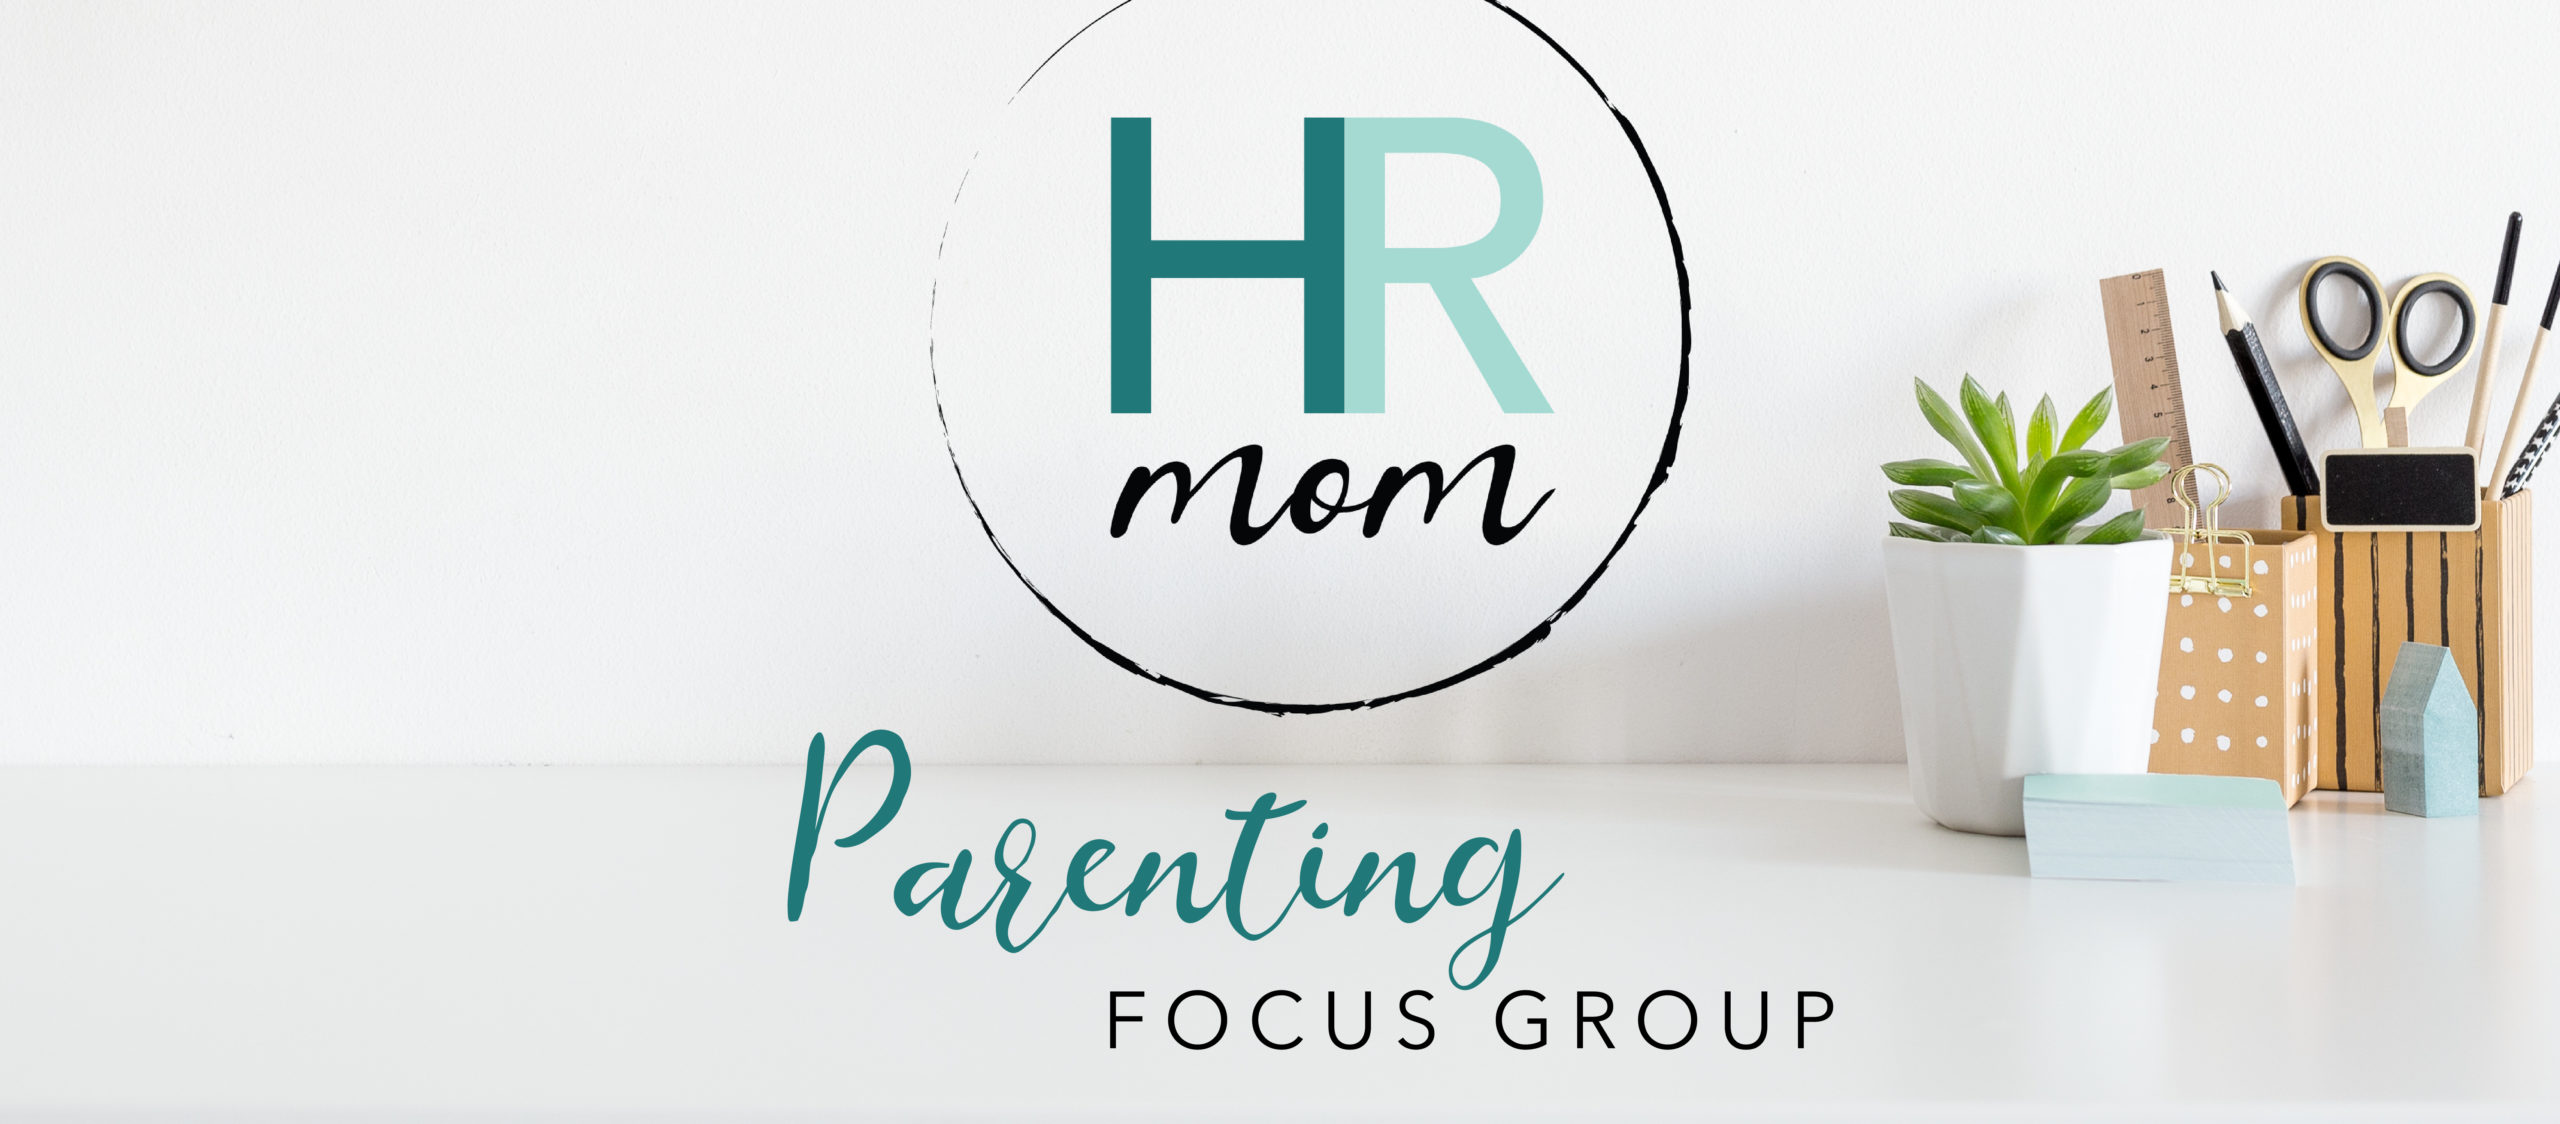 Parenting Focus Group - FB Cover Photo